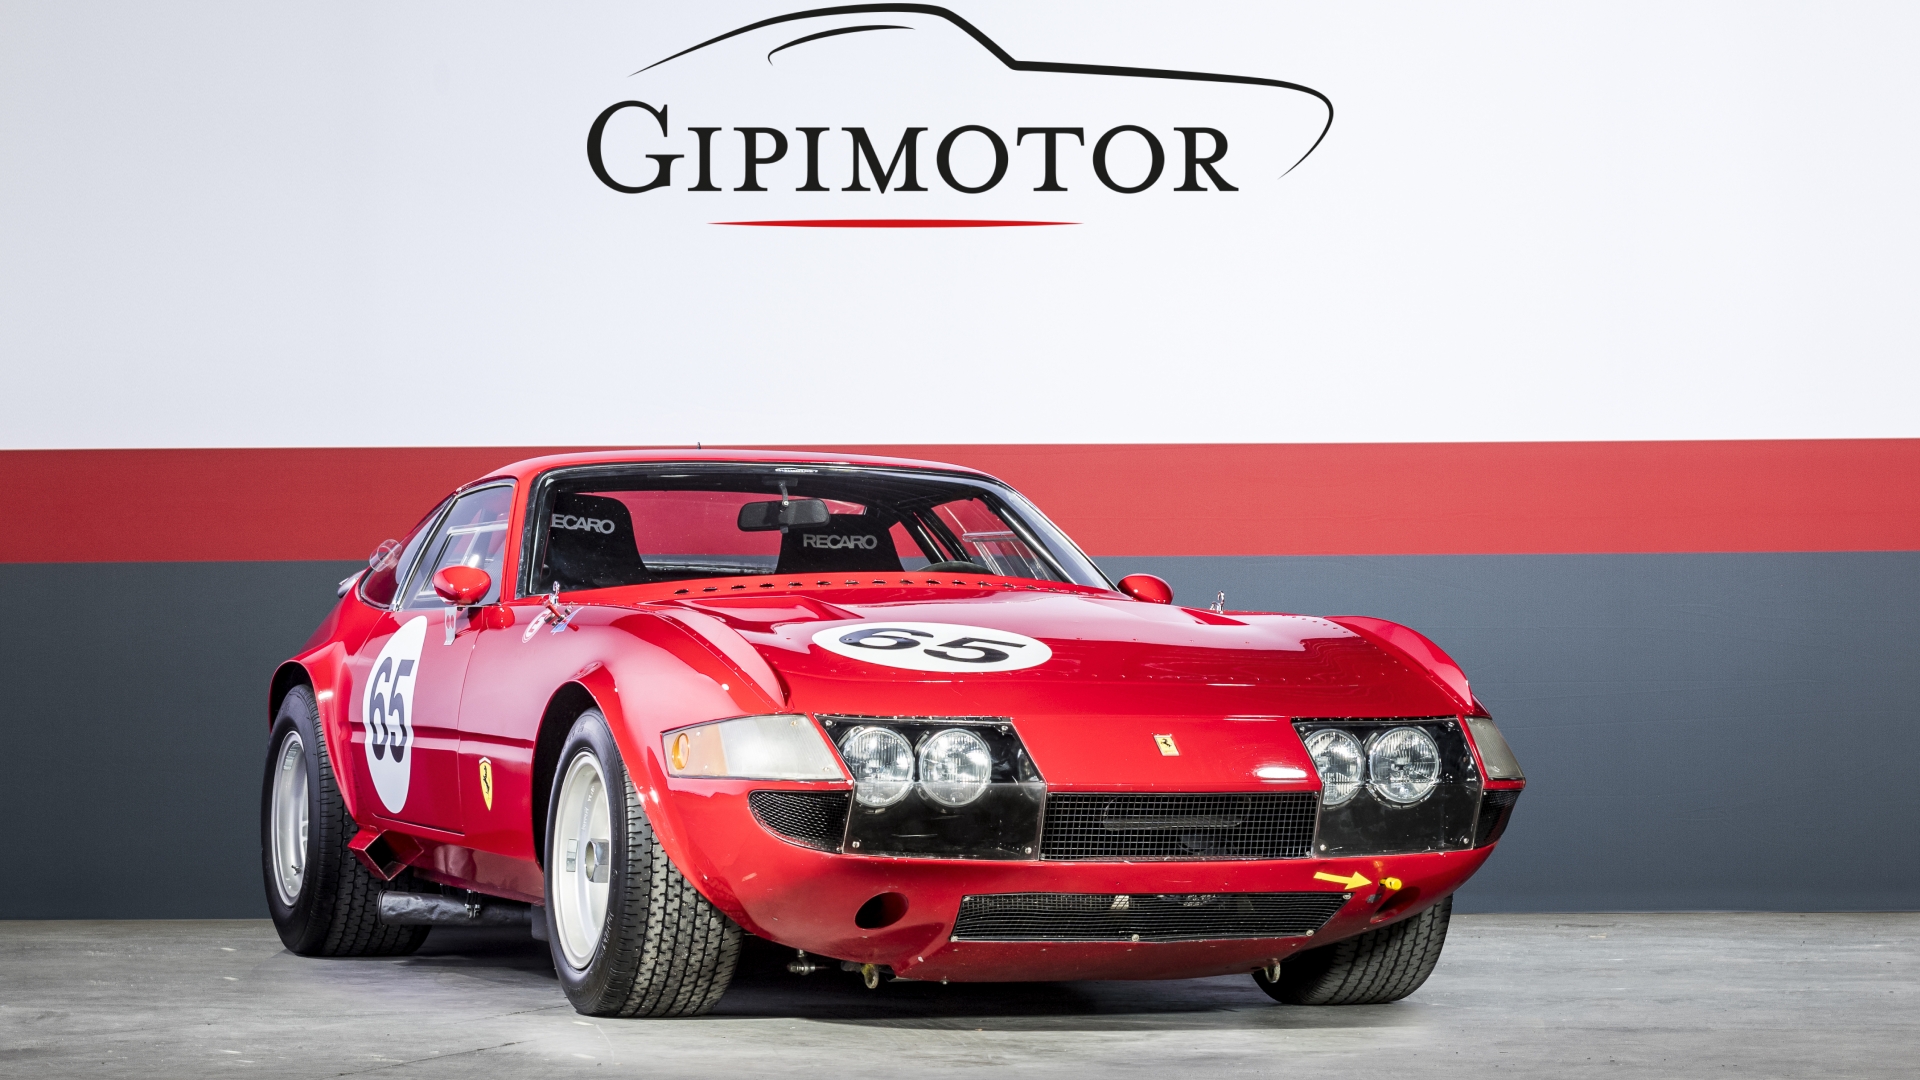 Ferrari - 365 GTB/4 "Daytona" Gr IV · Gipimotor